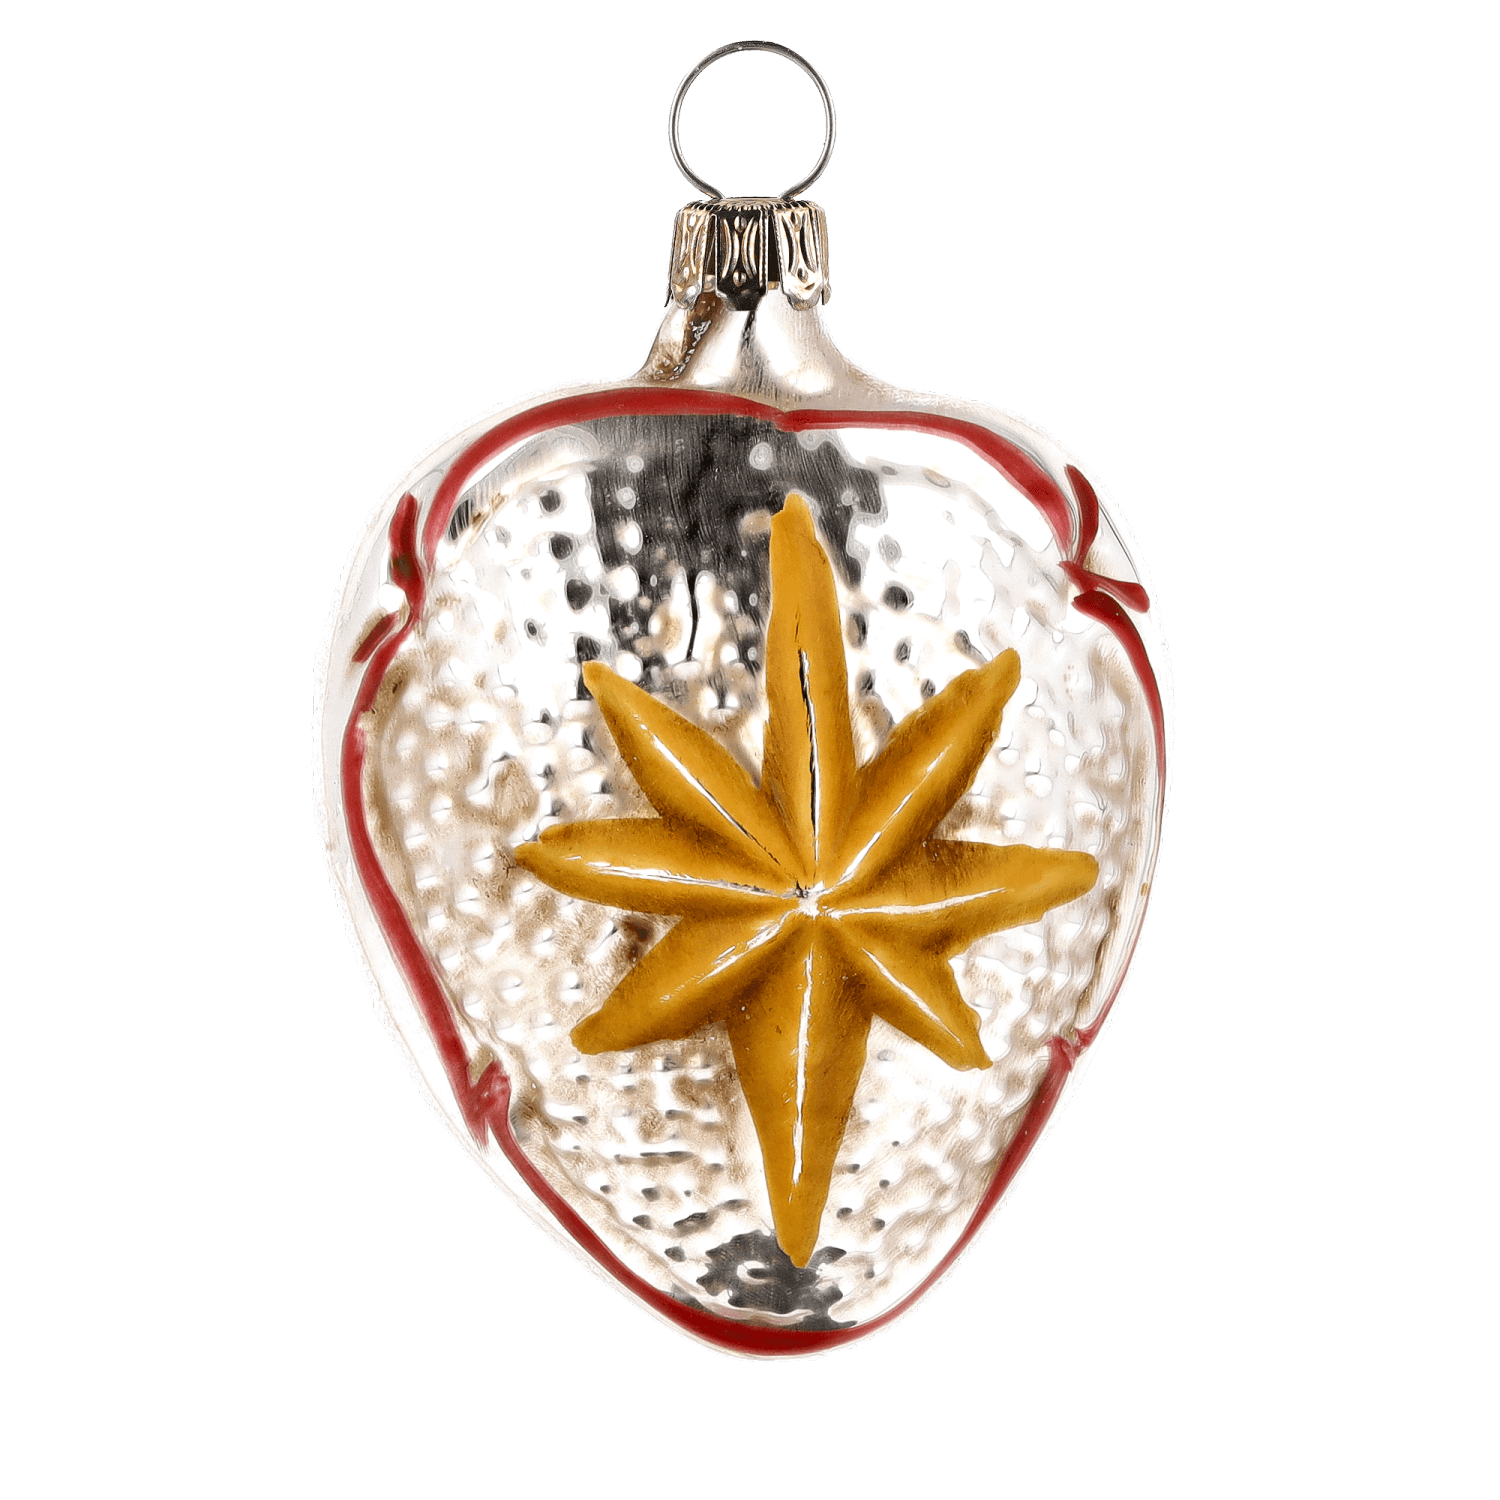 MAROLIN® - Glass ornament "Heart with snowdrop"